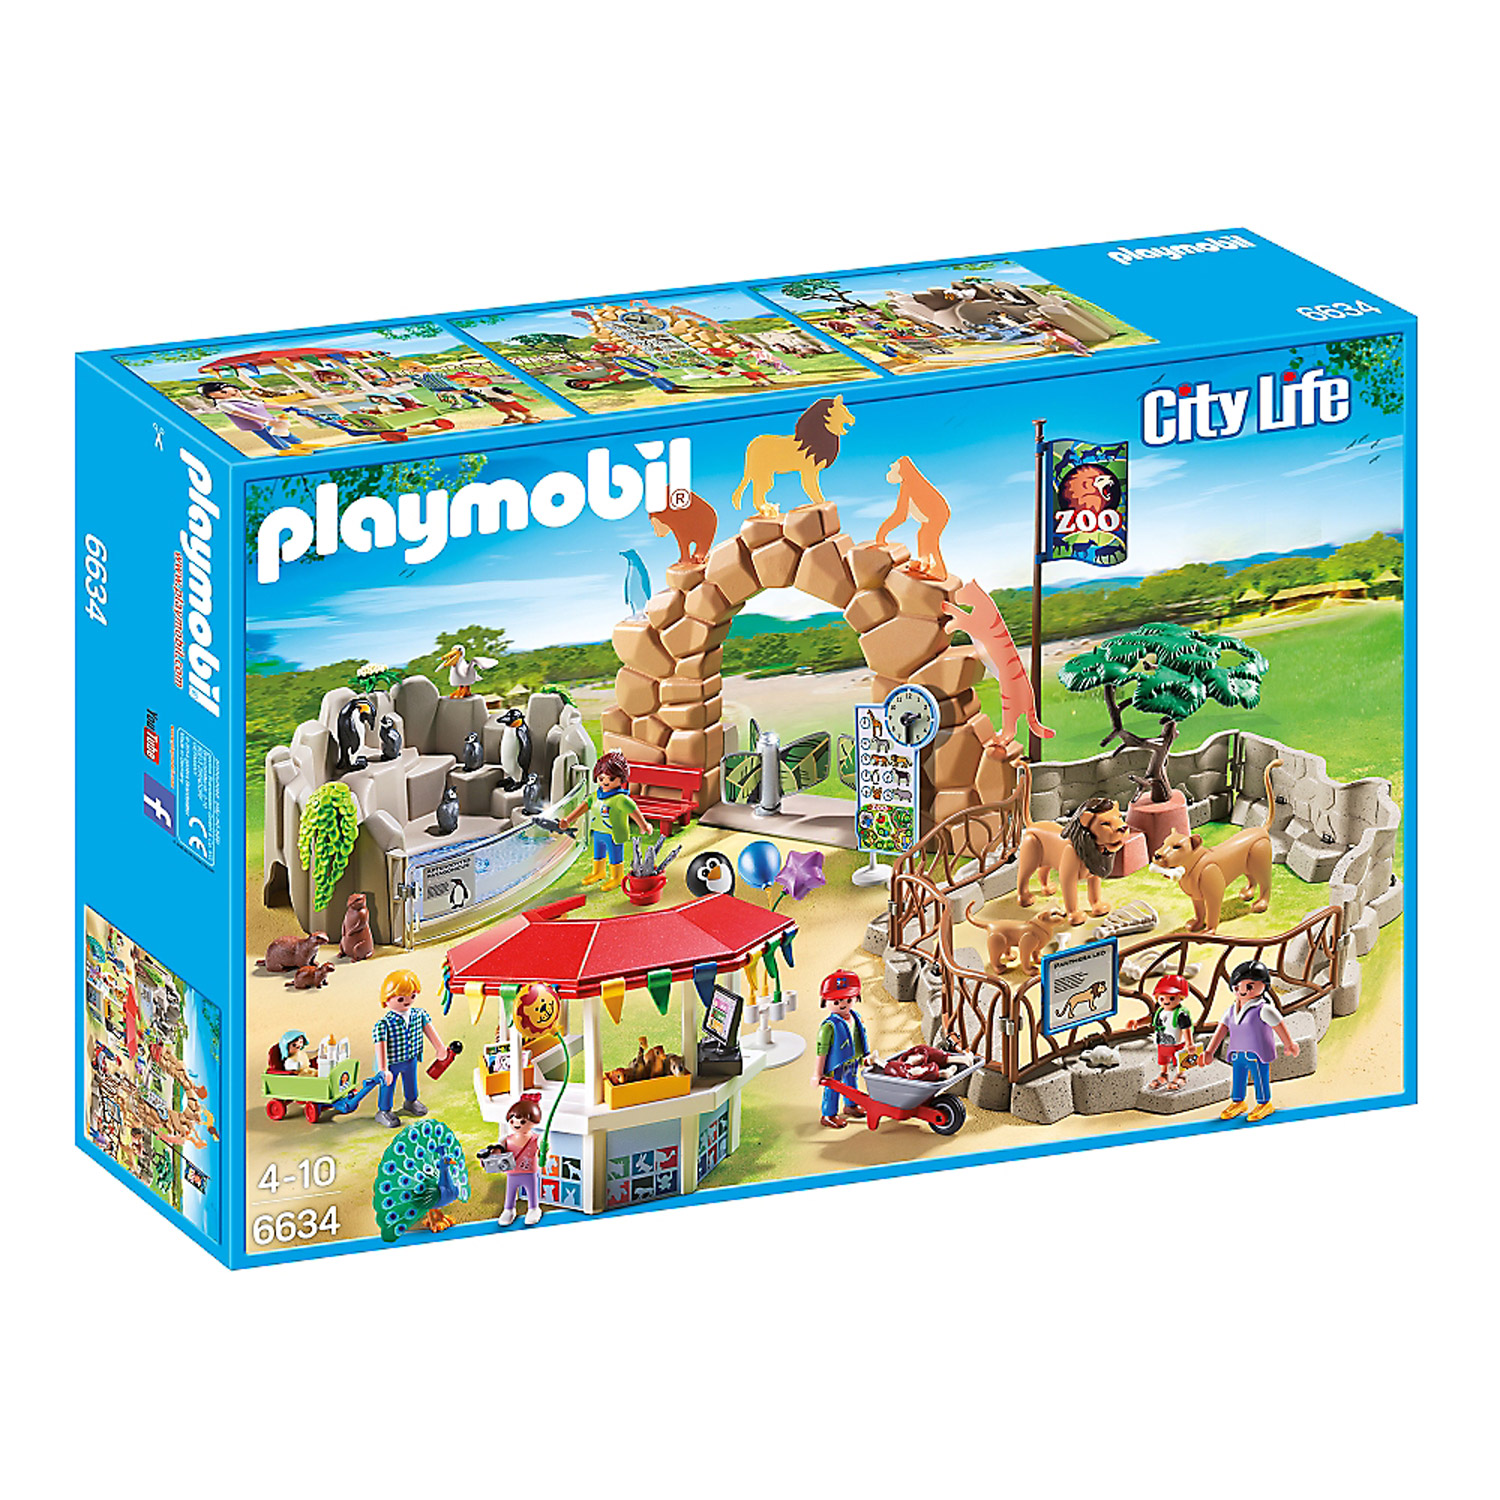 Playmobil 6634 - City Life - grand zoo - Jeux et jouets Playmobil